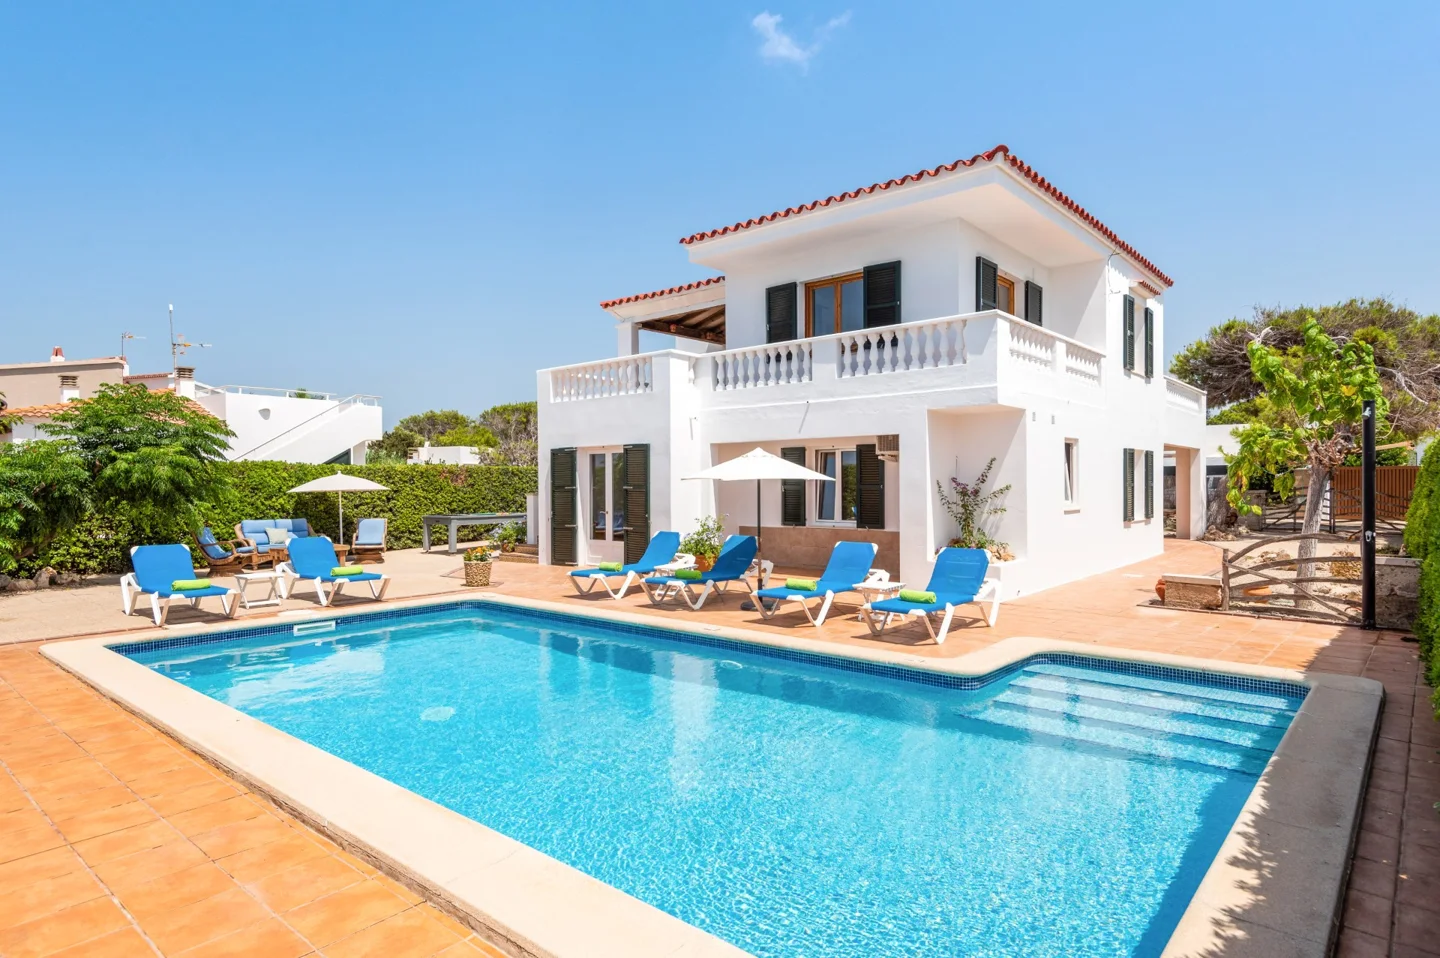 Ferienvermietung - Charmante Villa mit atemberaubendem Meerblick in Cala Blanca, Menorca